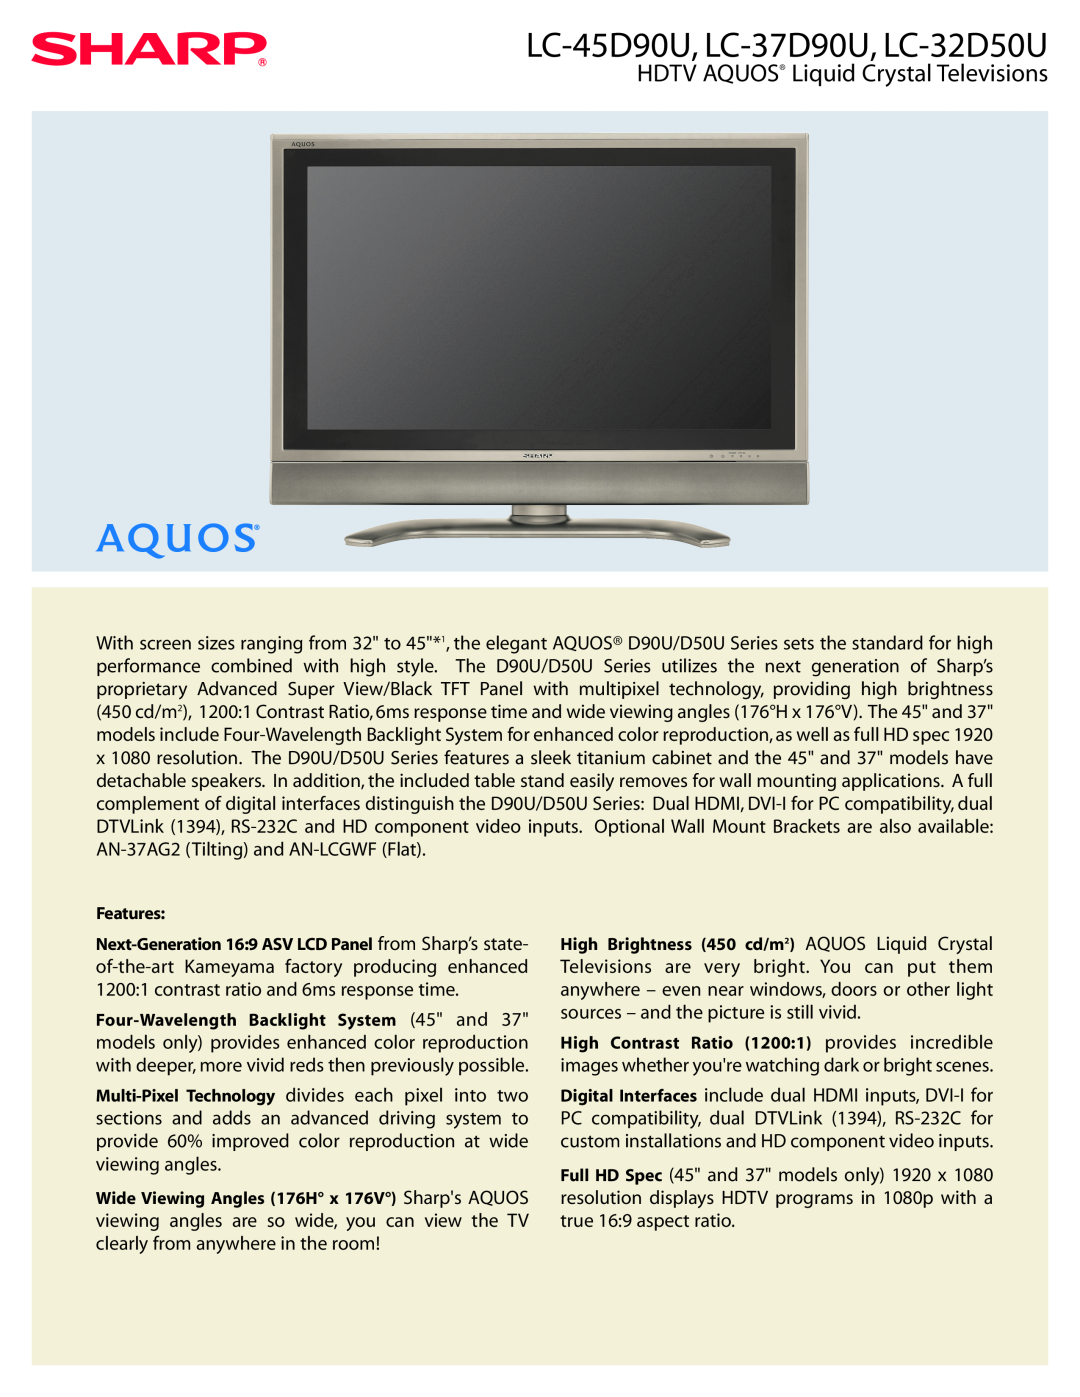 Sharp LC-45D90U, LC-37D90U, LC-32D50U, LC 32D50U manual HDTV AQUOS Liquid Crystal Televisions 